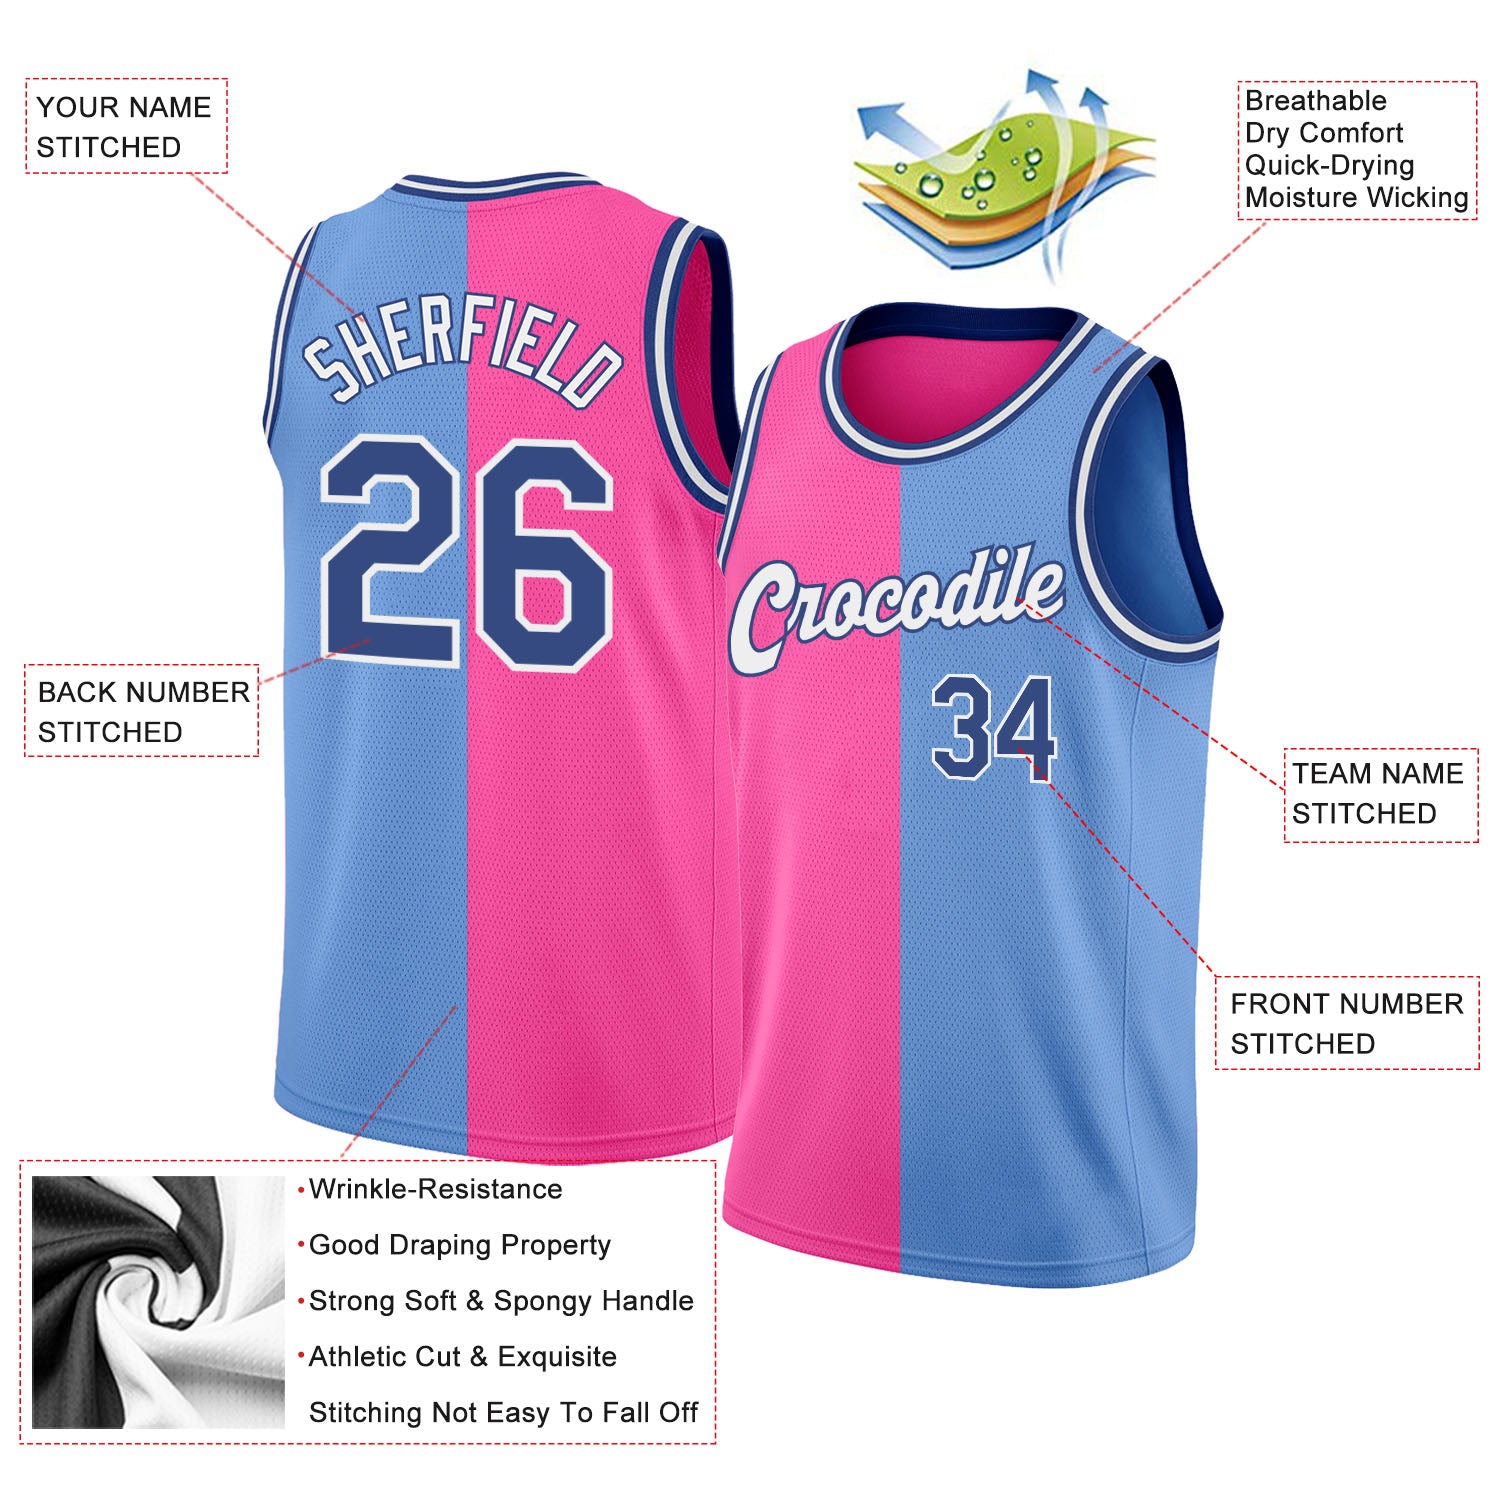 Custom Pink Royal-Light Blue Authentic Split Fashion Baseball